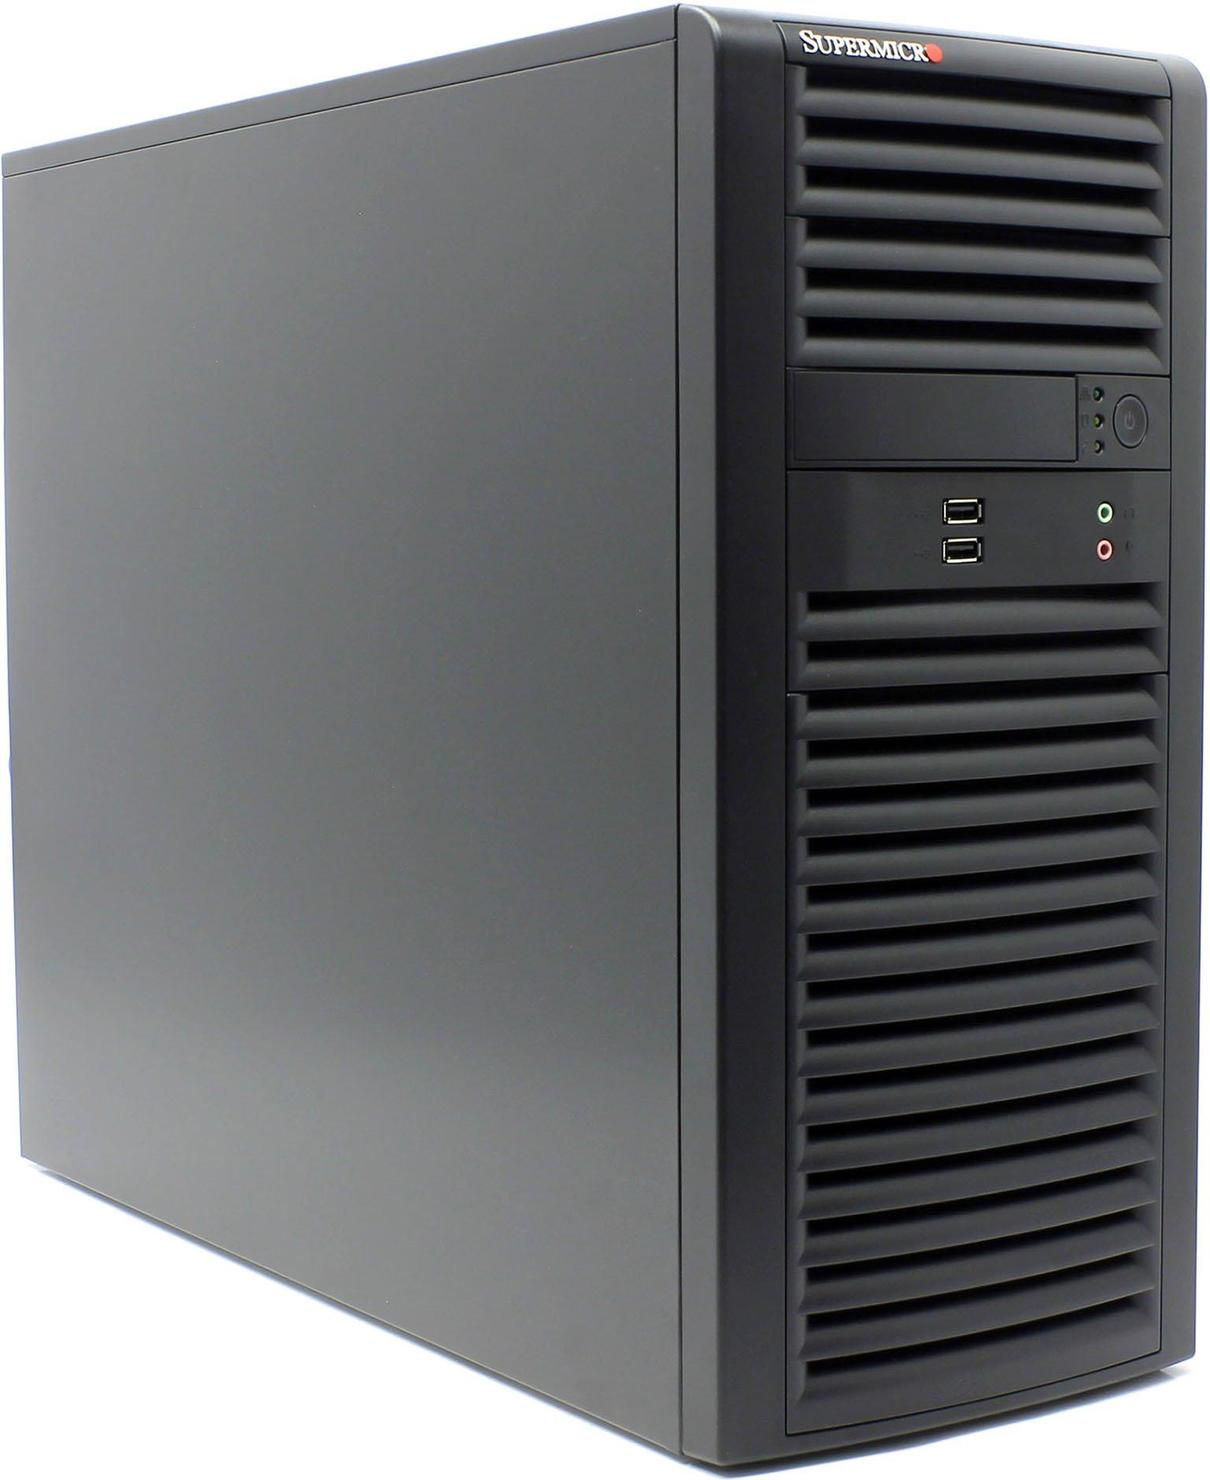 Сервер Dell R420